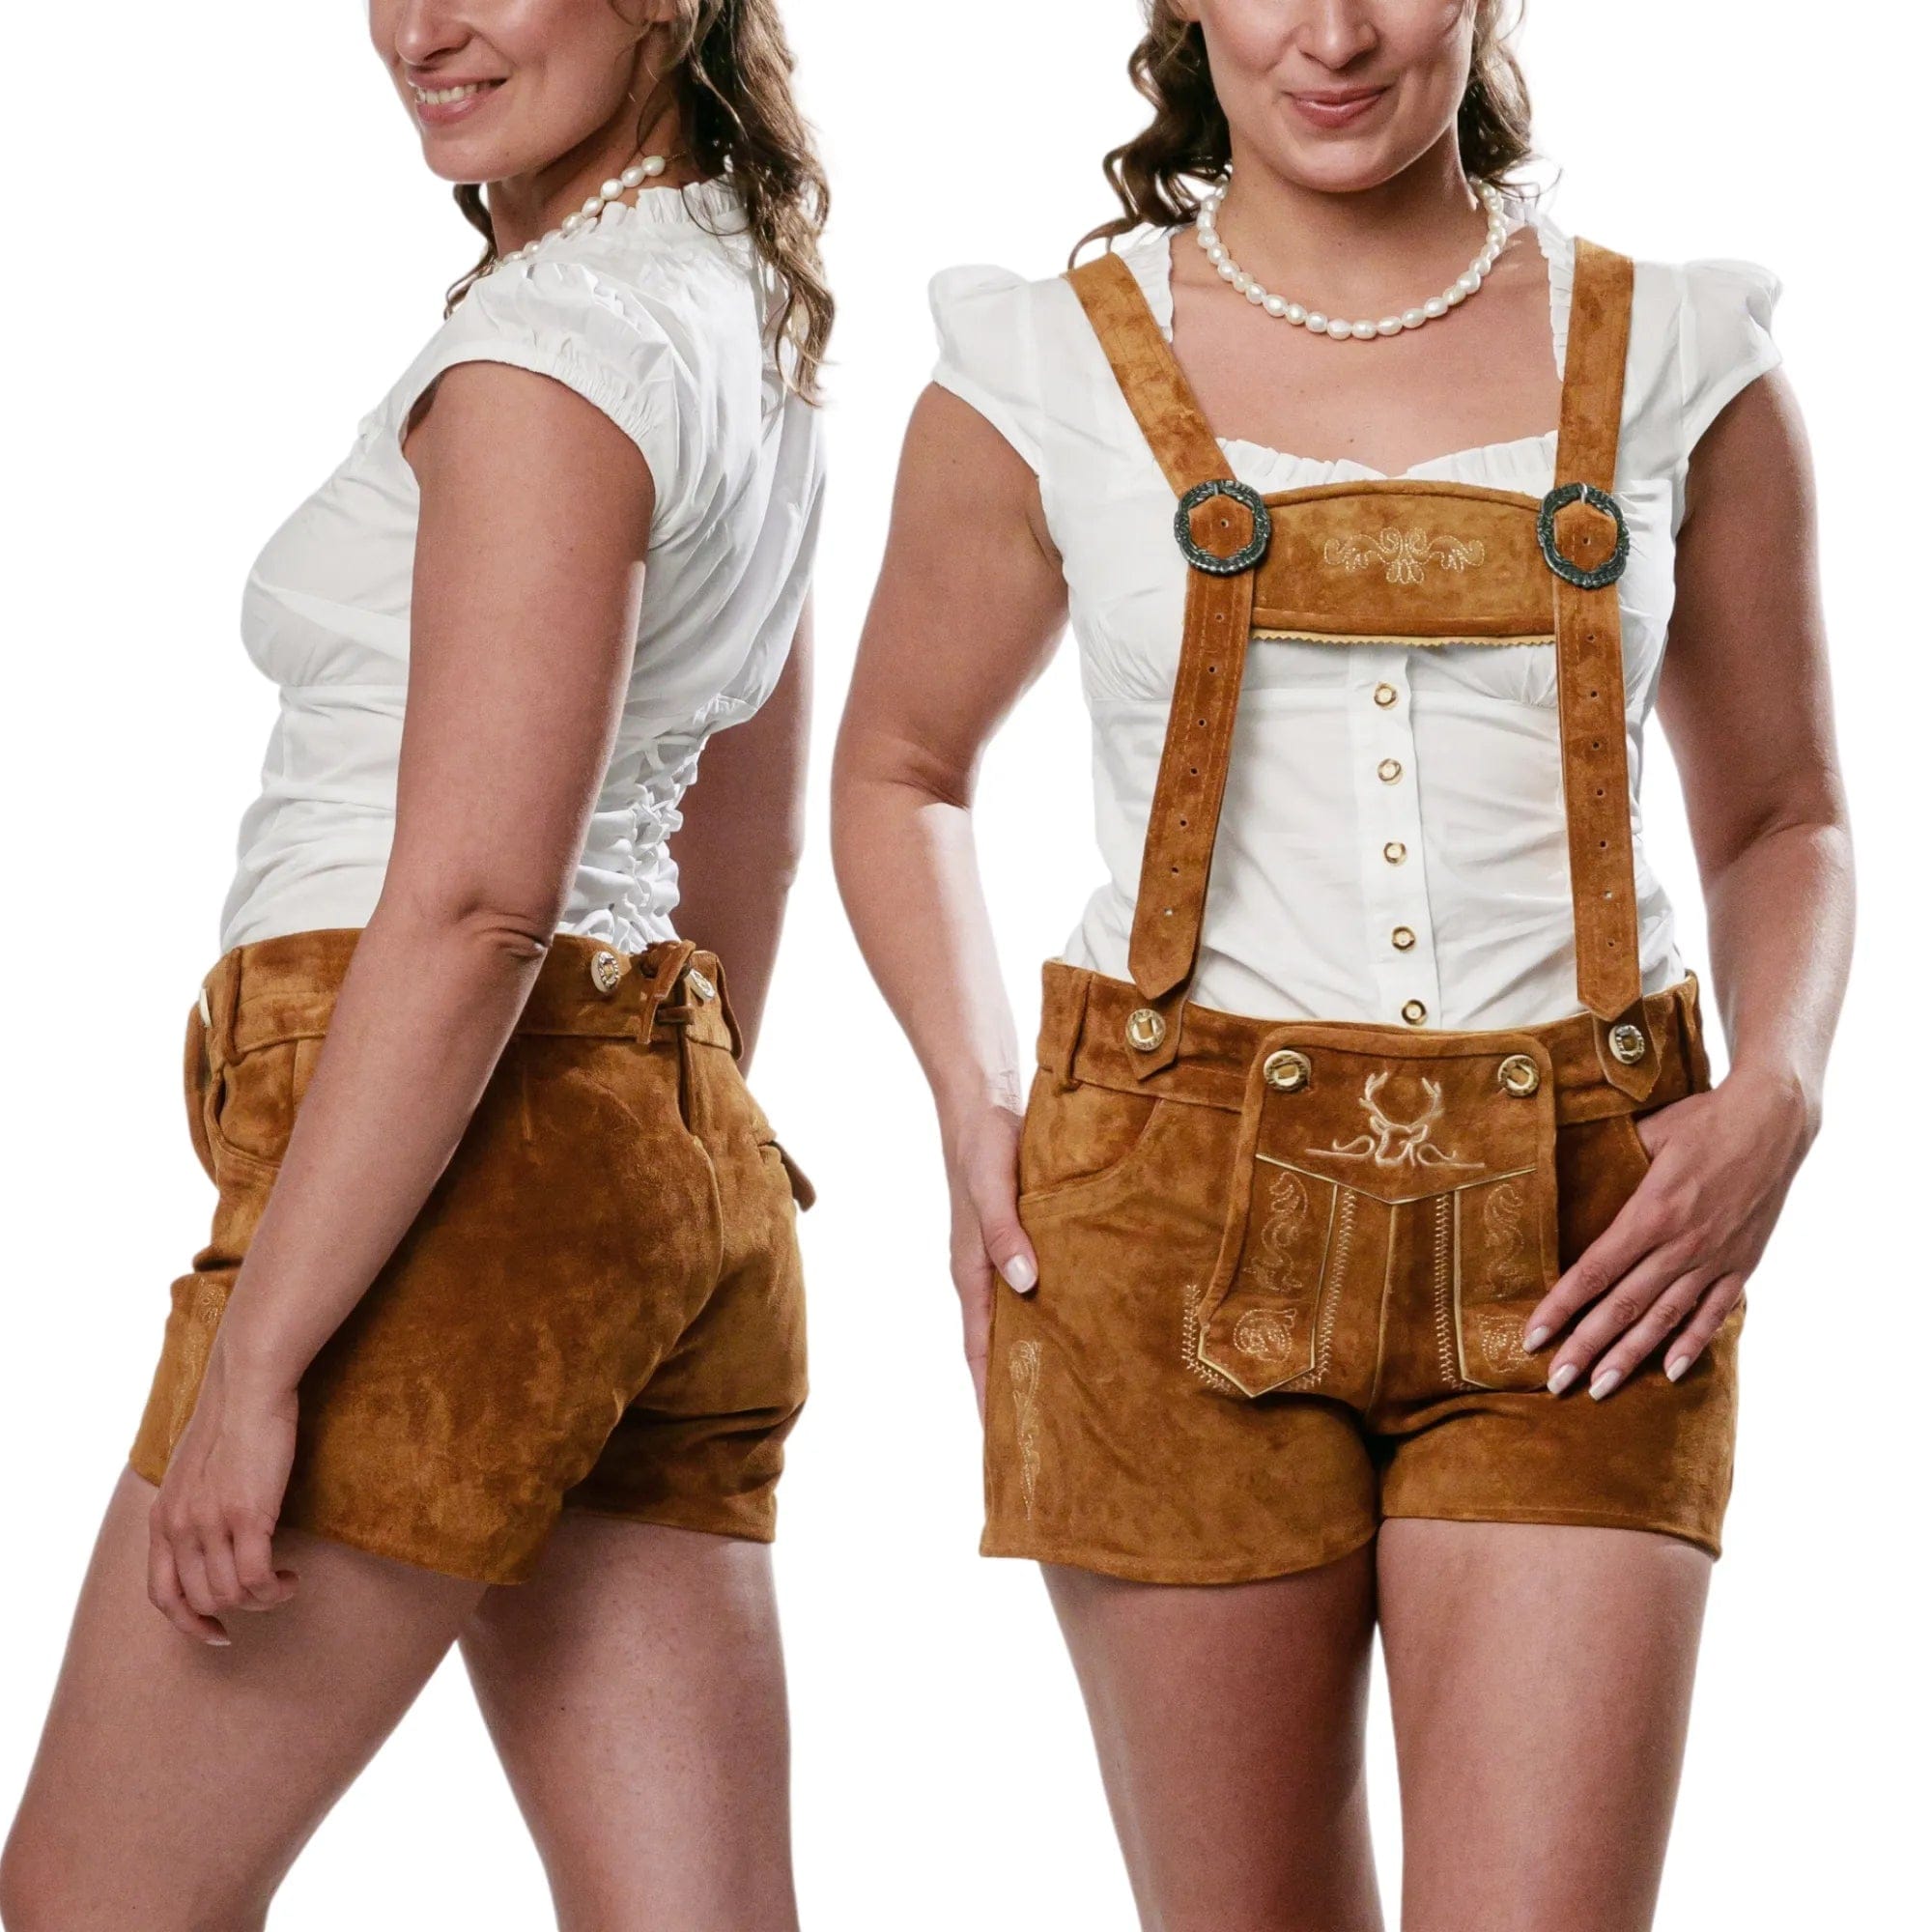 Bavaria Trachten Lederhosen Women Hot Pants Light Brown Oktoberfest 